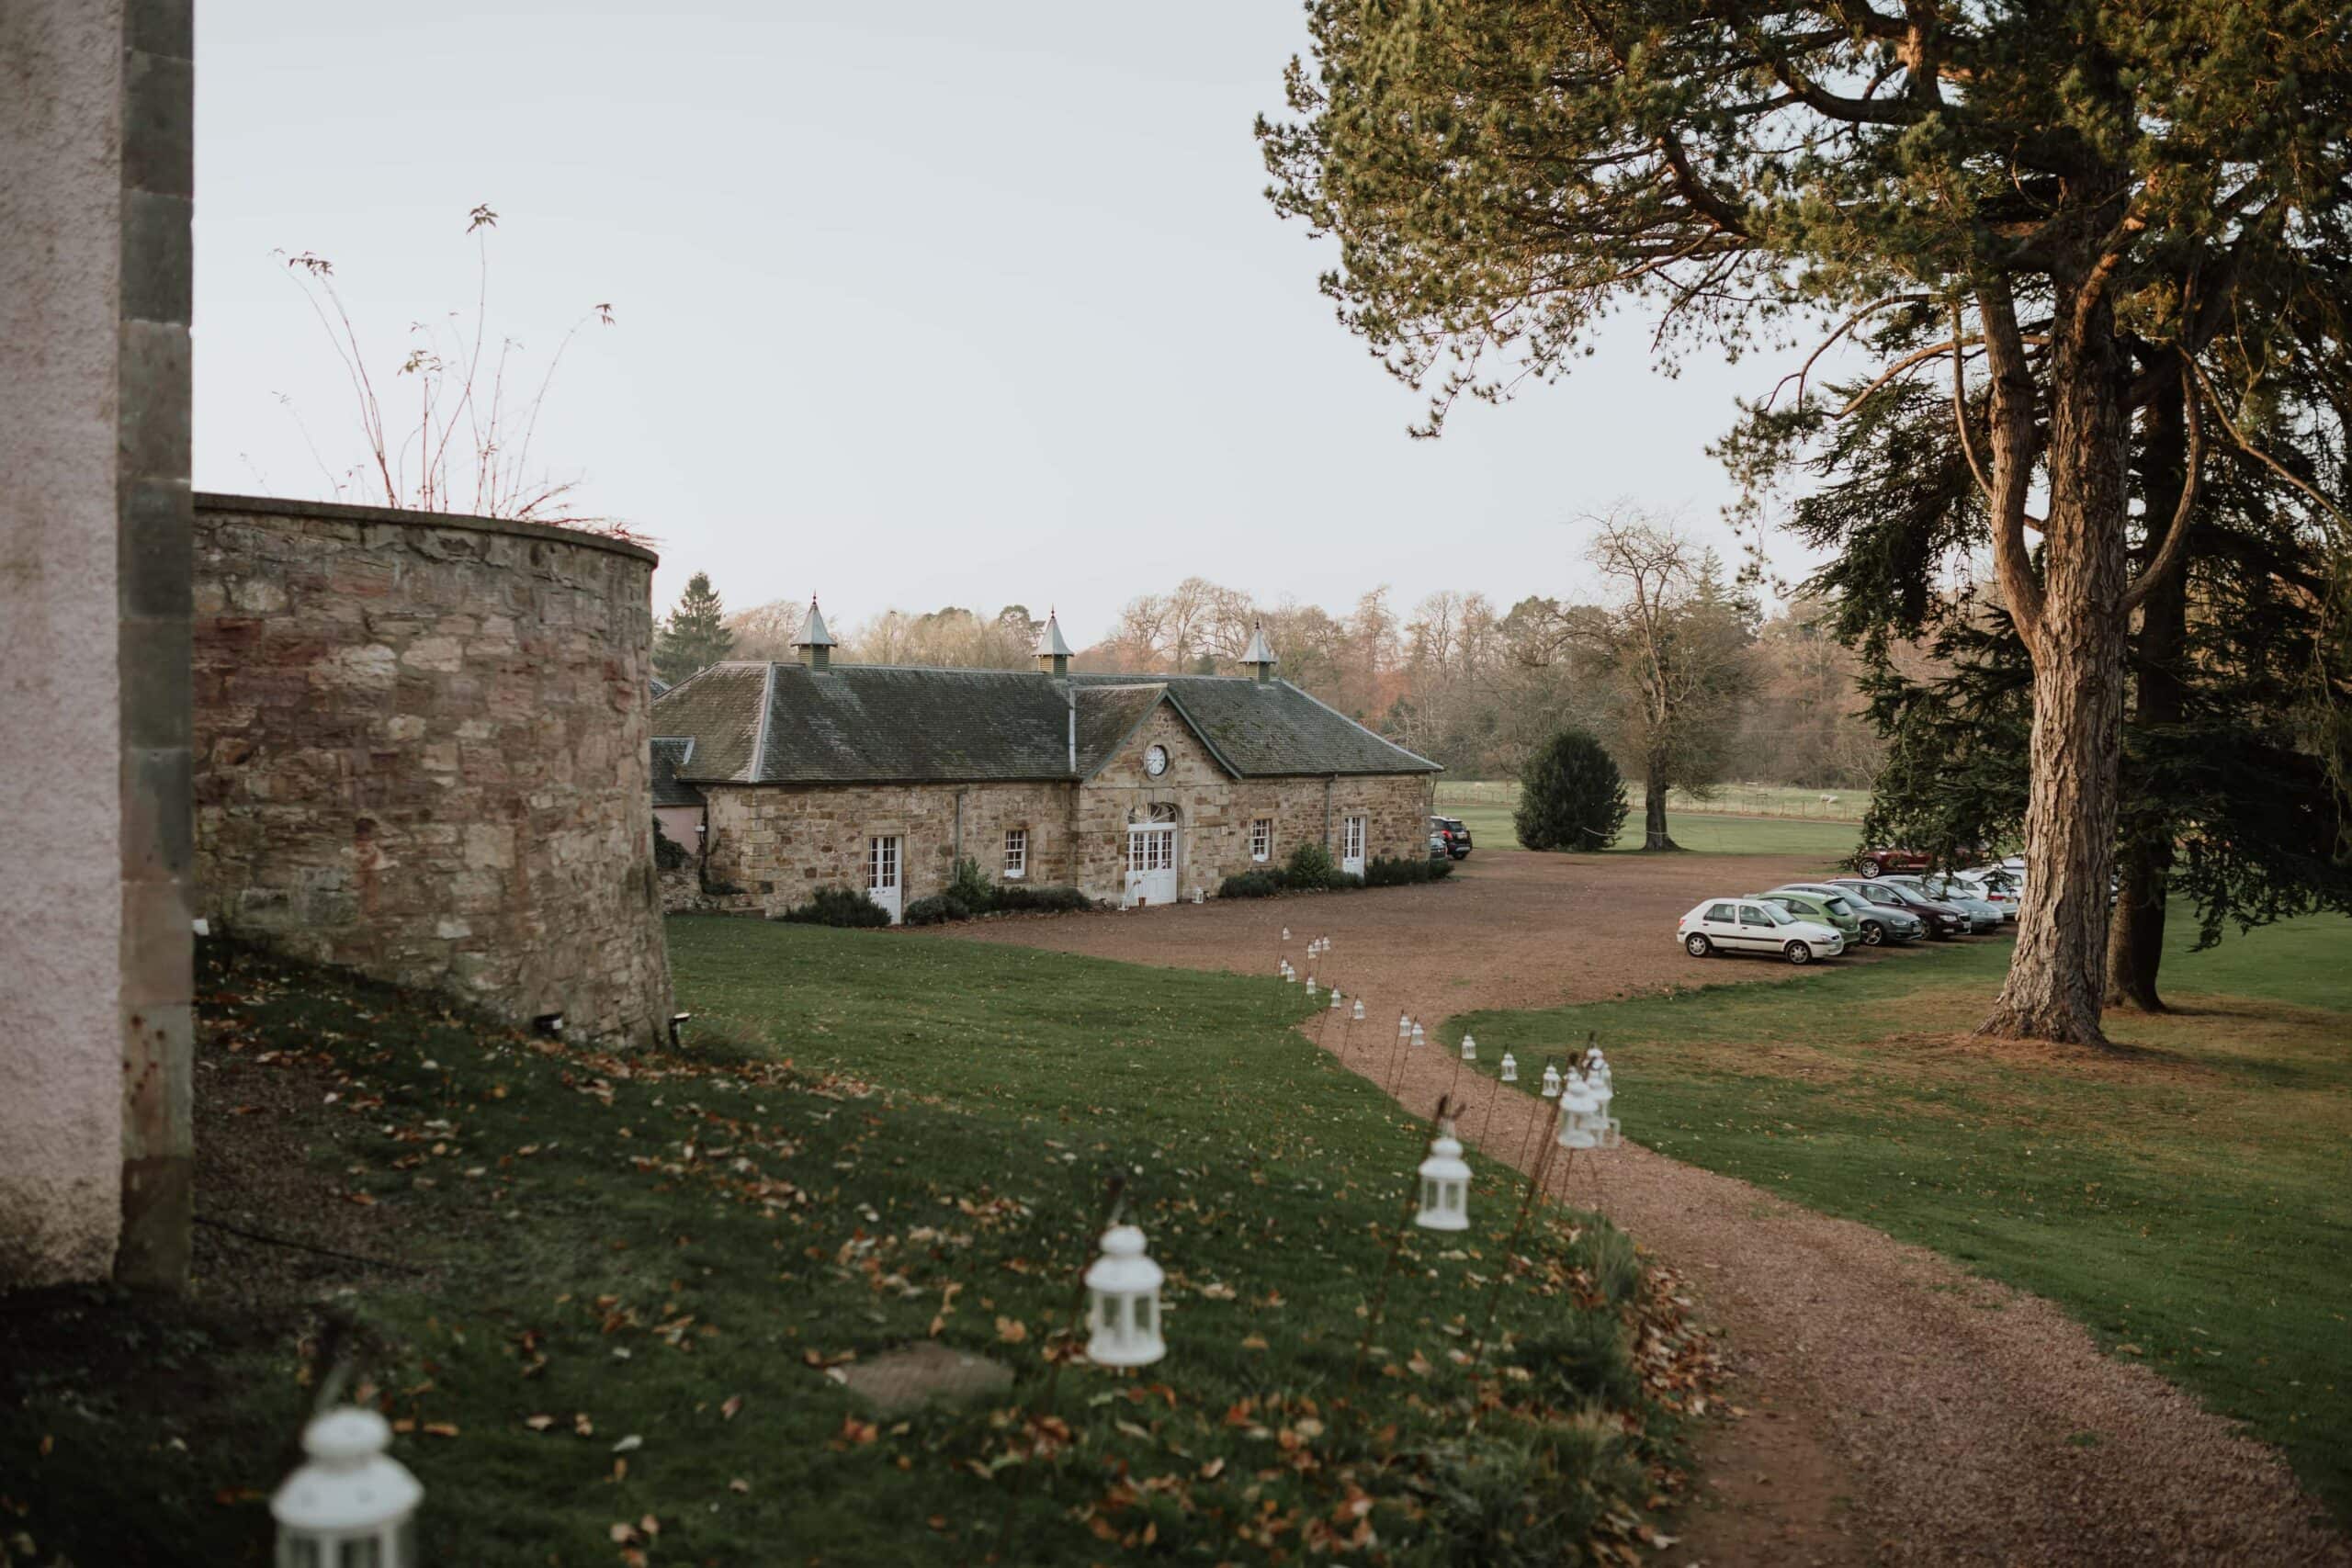 colstoun house wedding venue scotland stately home near haddington edinburgh exterior of the venue in winter